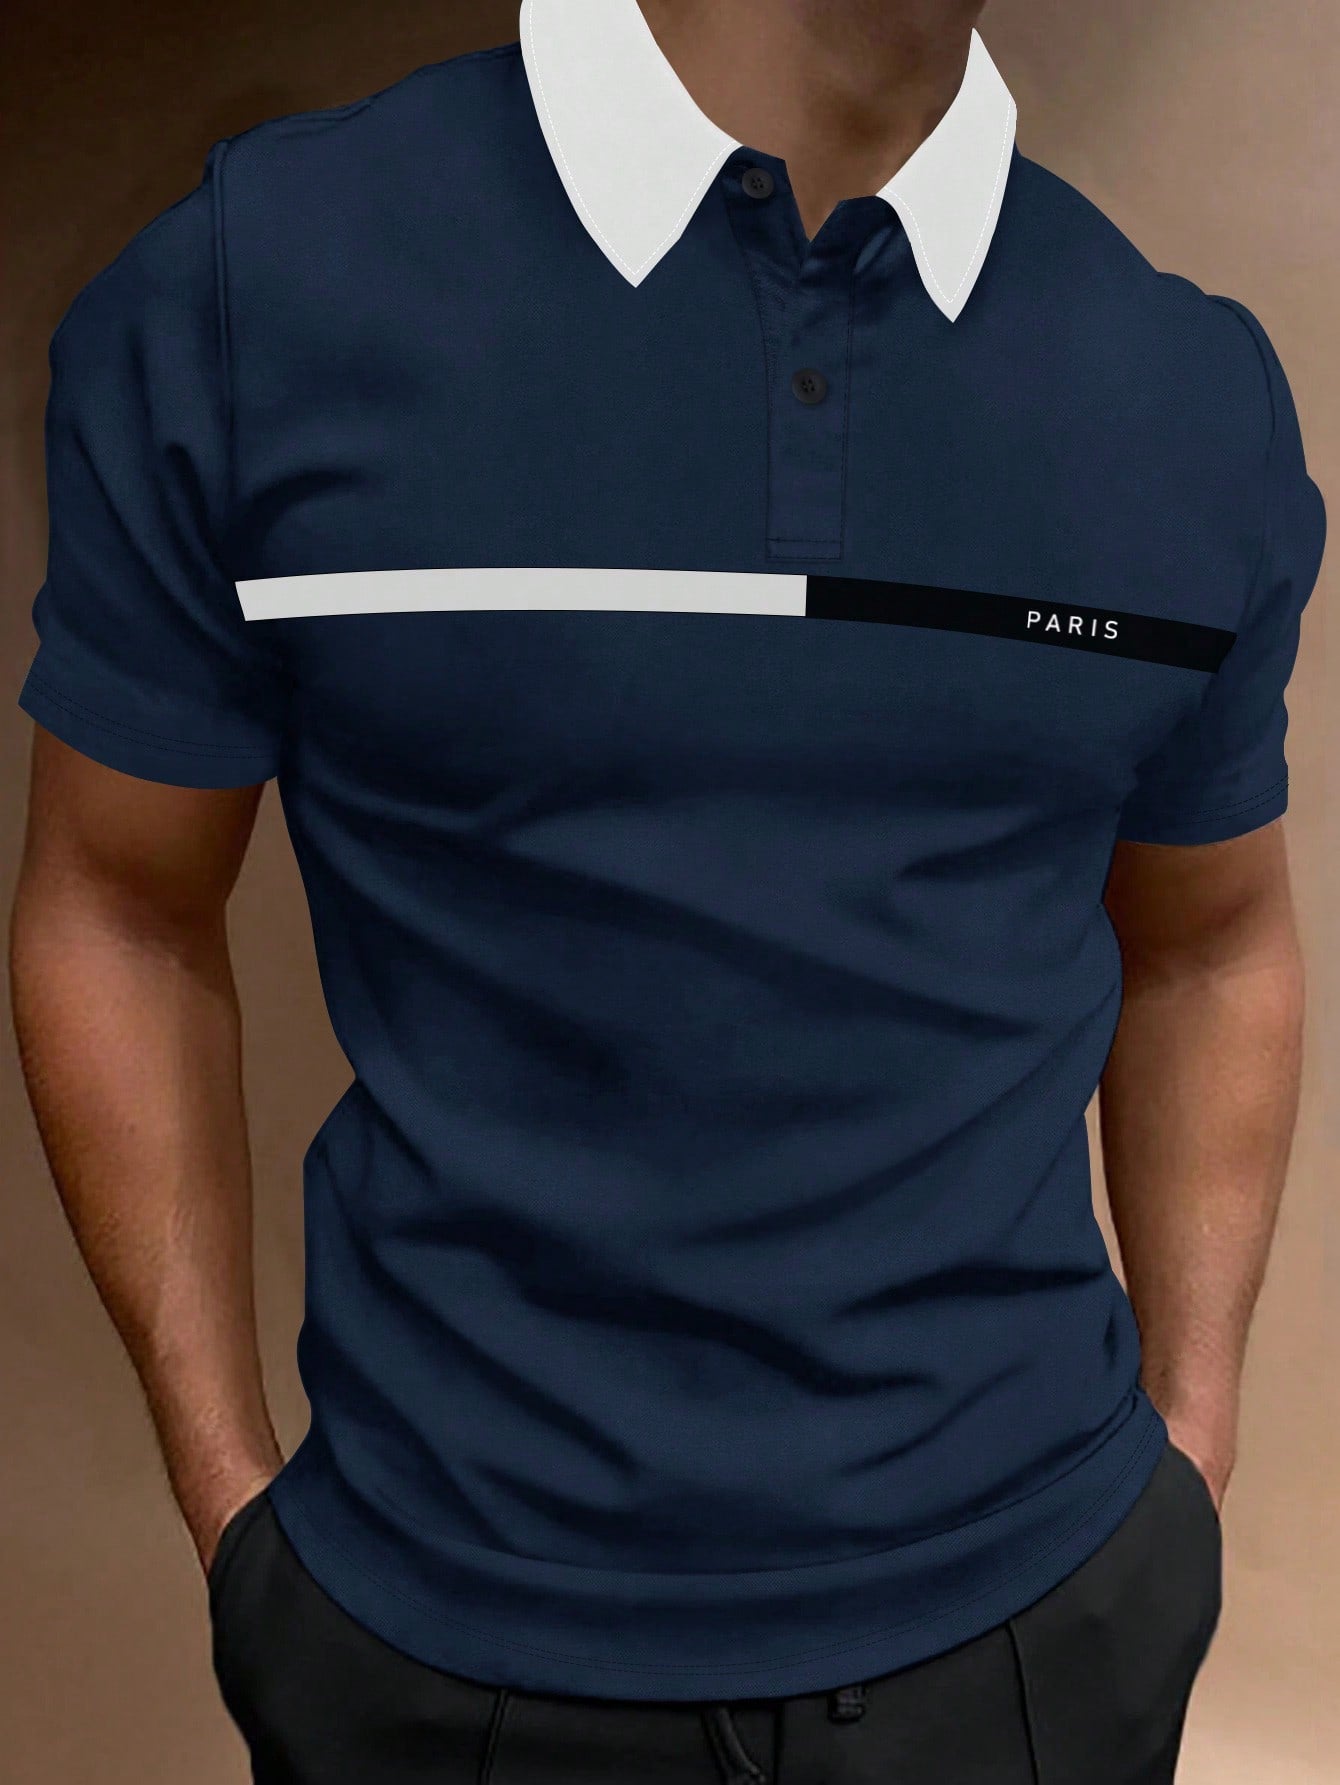 Stylish Men's Letter Polo Shirt